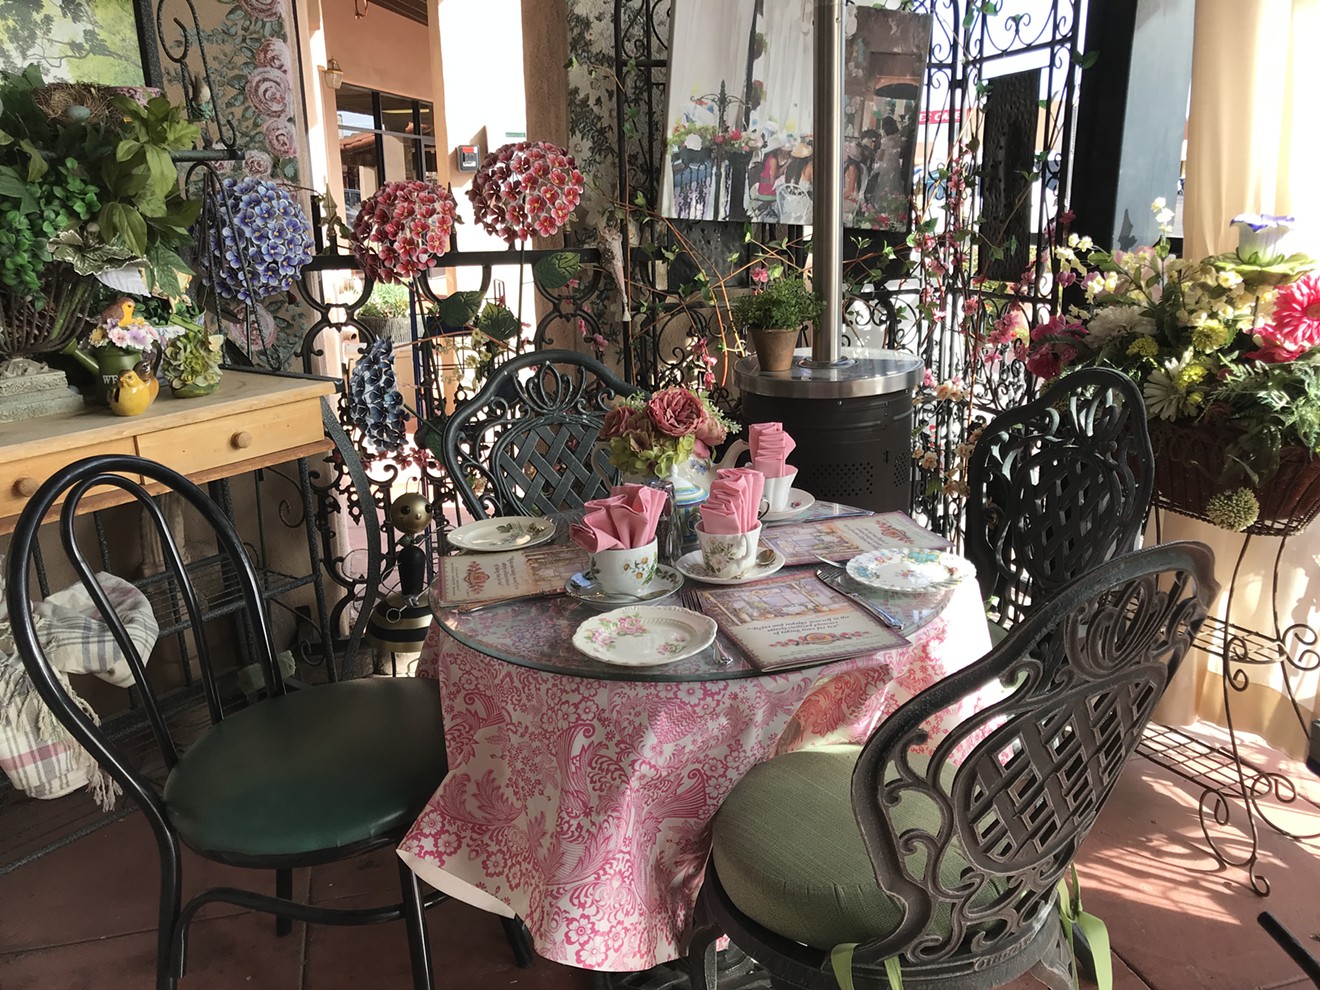 Enjoy intimate holiday tea at the English Rose Tea Room.